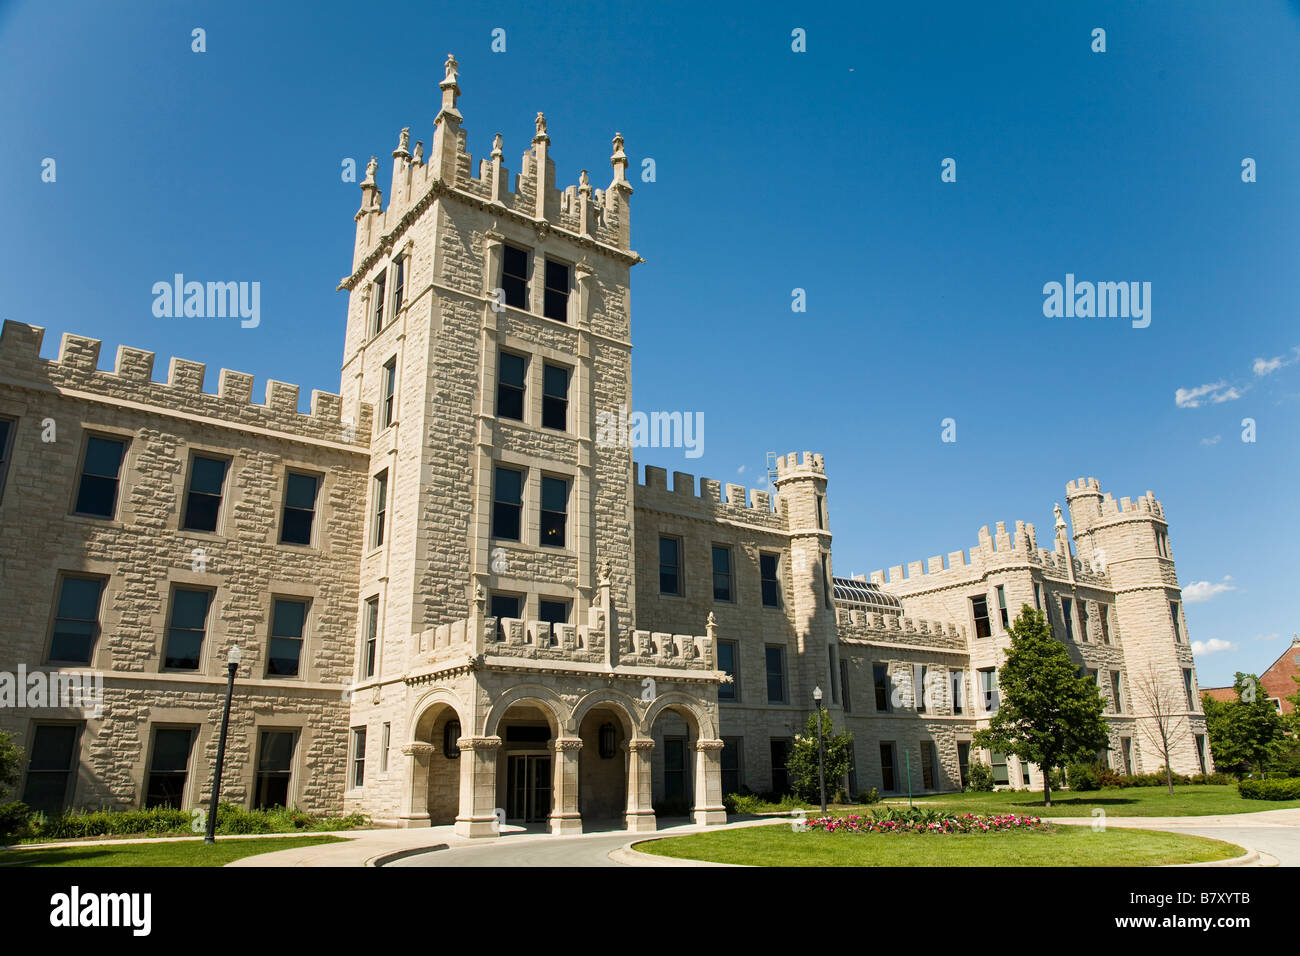 ILLINOIS DeKalb Altgeld Hall on campus of Northern Illinois University castle like design Stock Photo